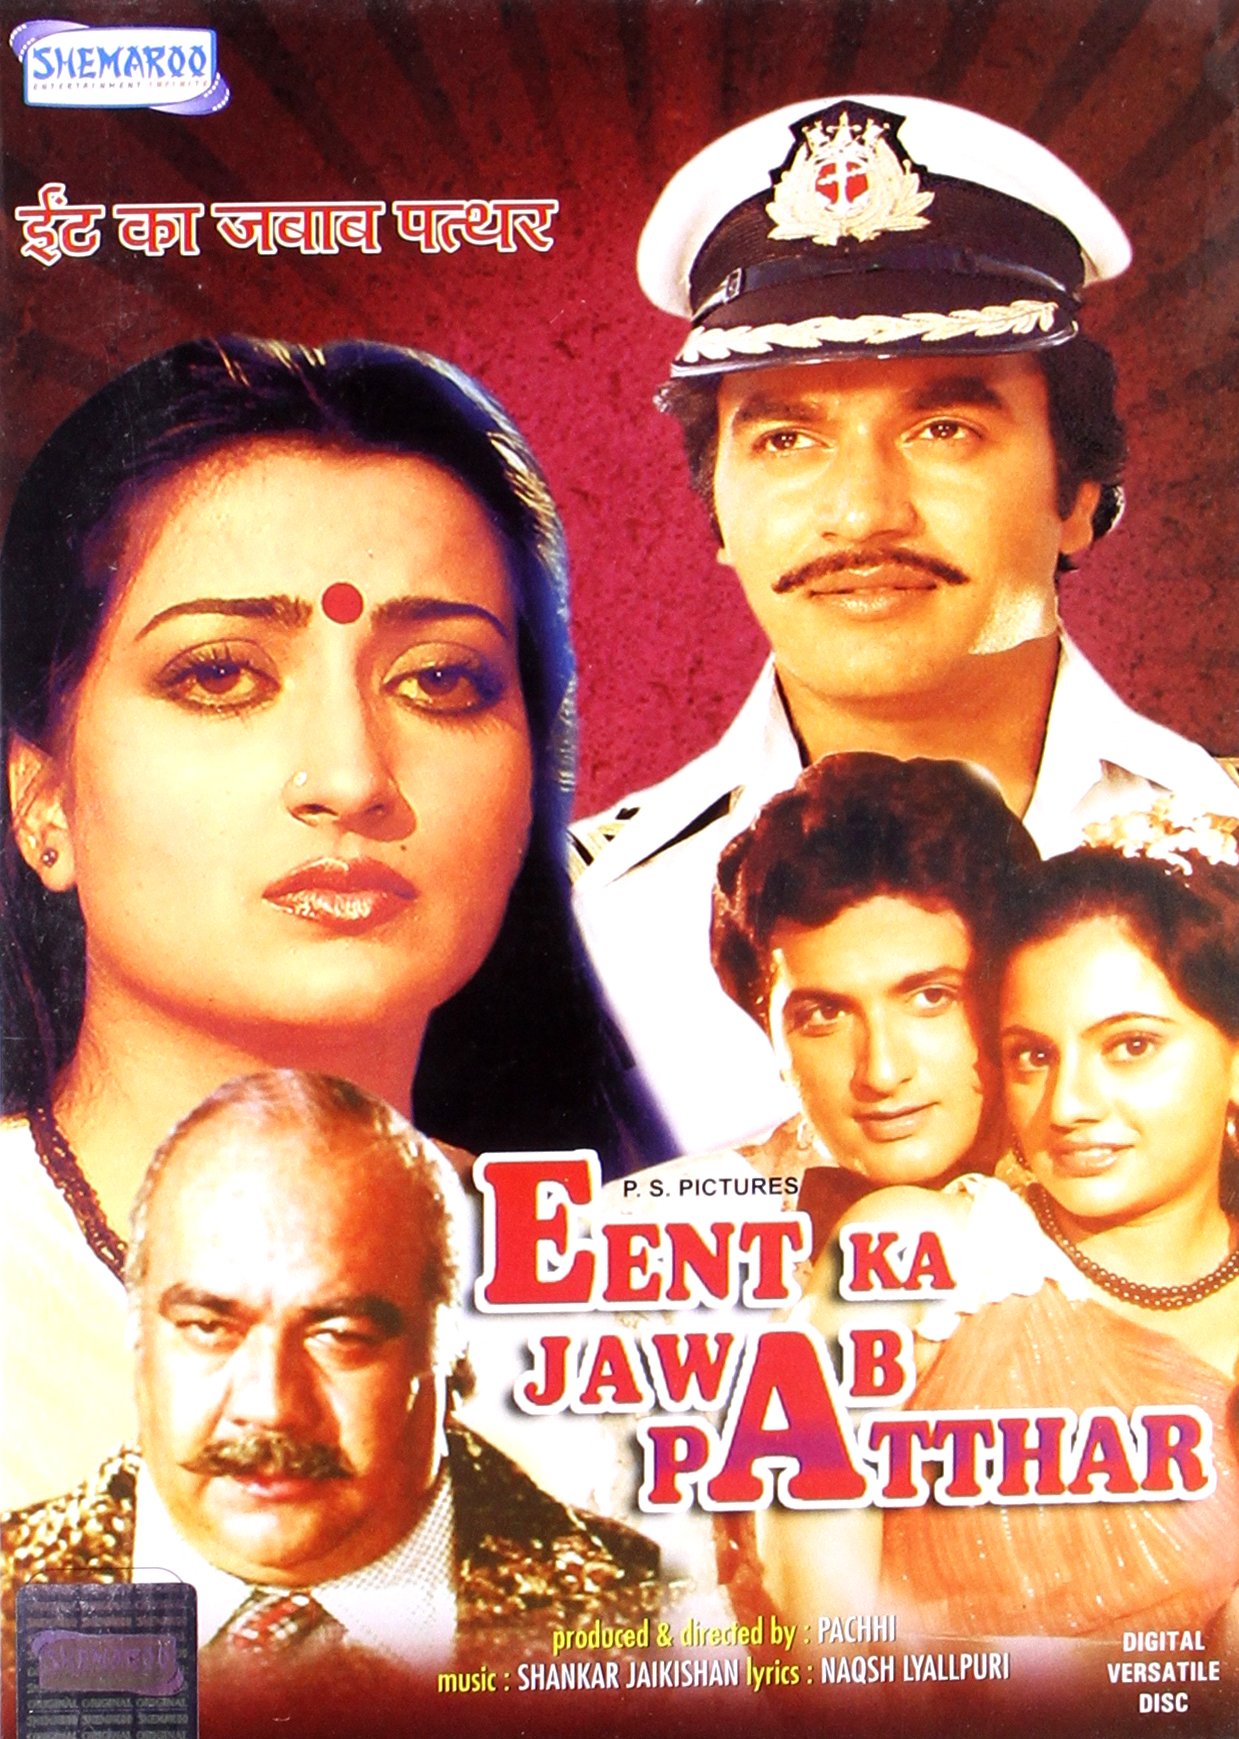 eent-ka-jawab-patthar-movie-purchase-or-watch-online